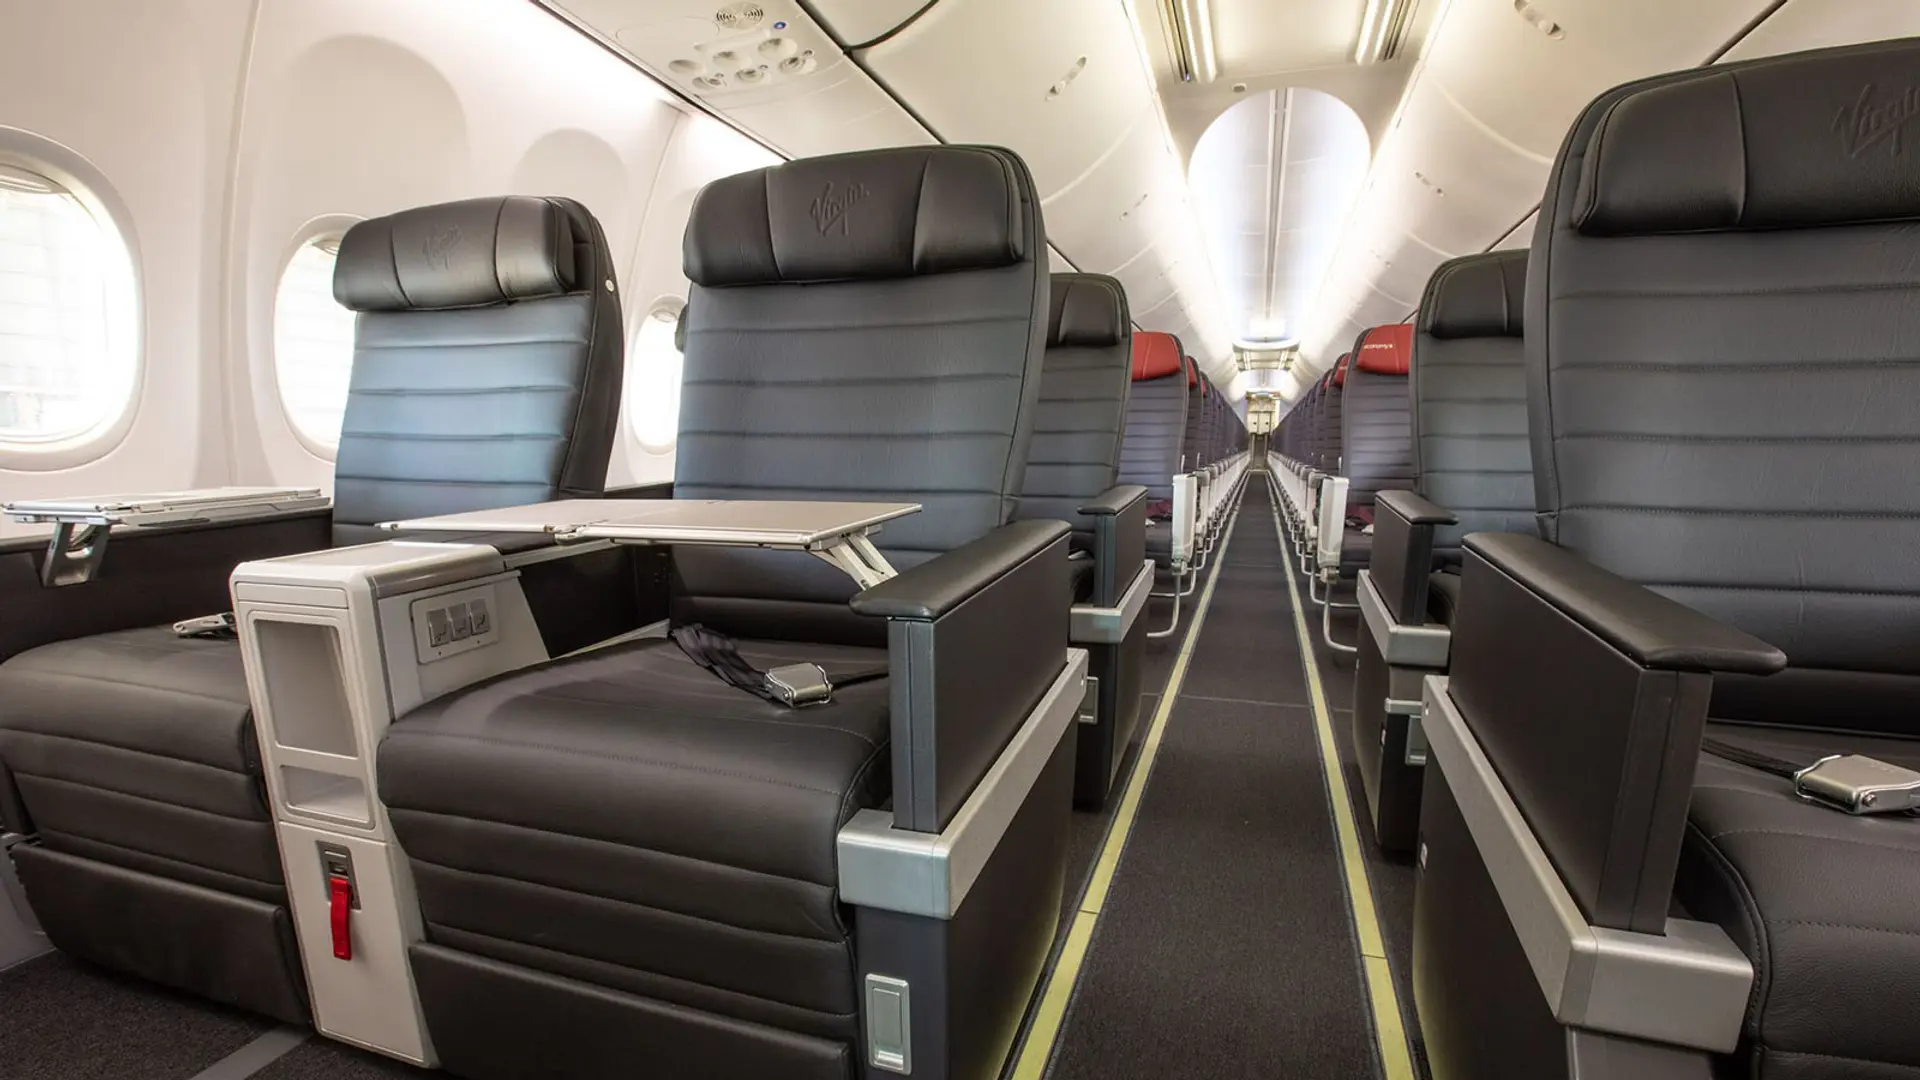 Airline review Cabin & Seat - Virgin Australia - 4